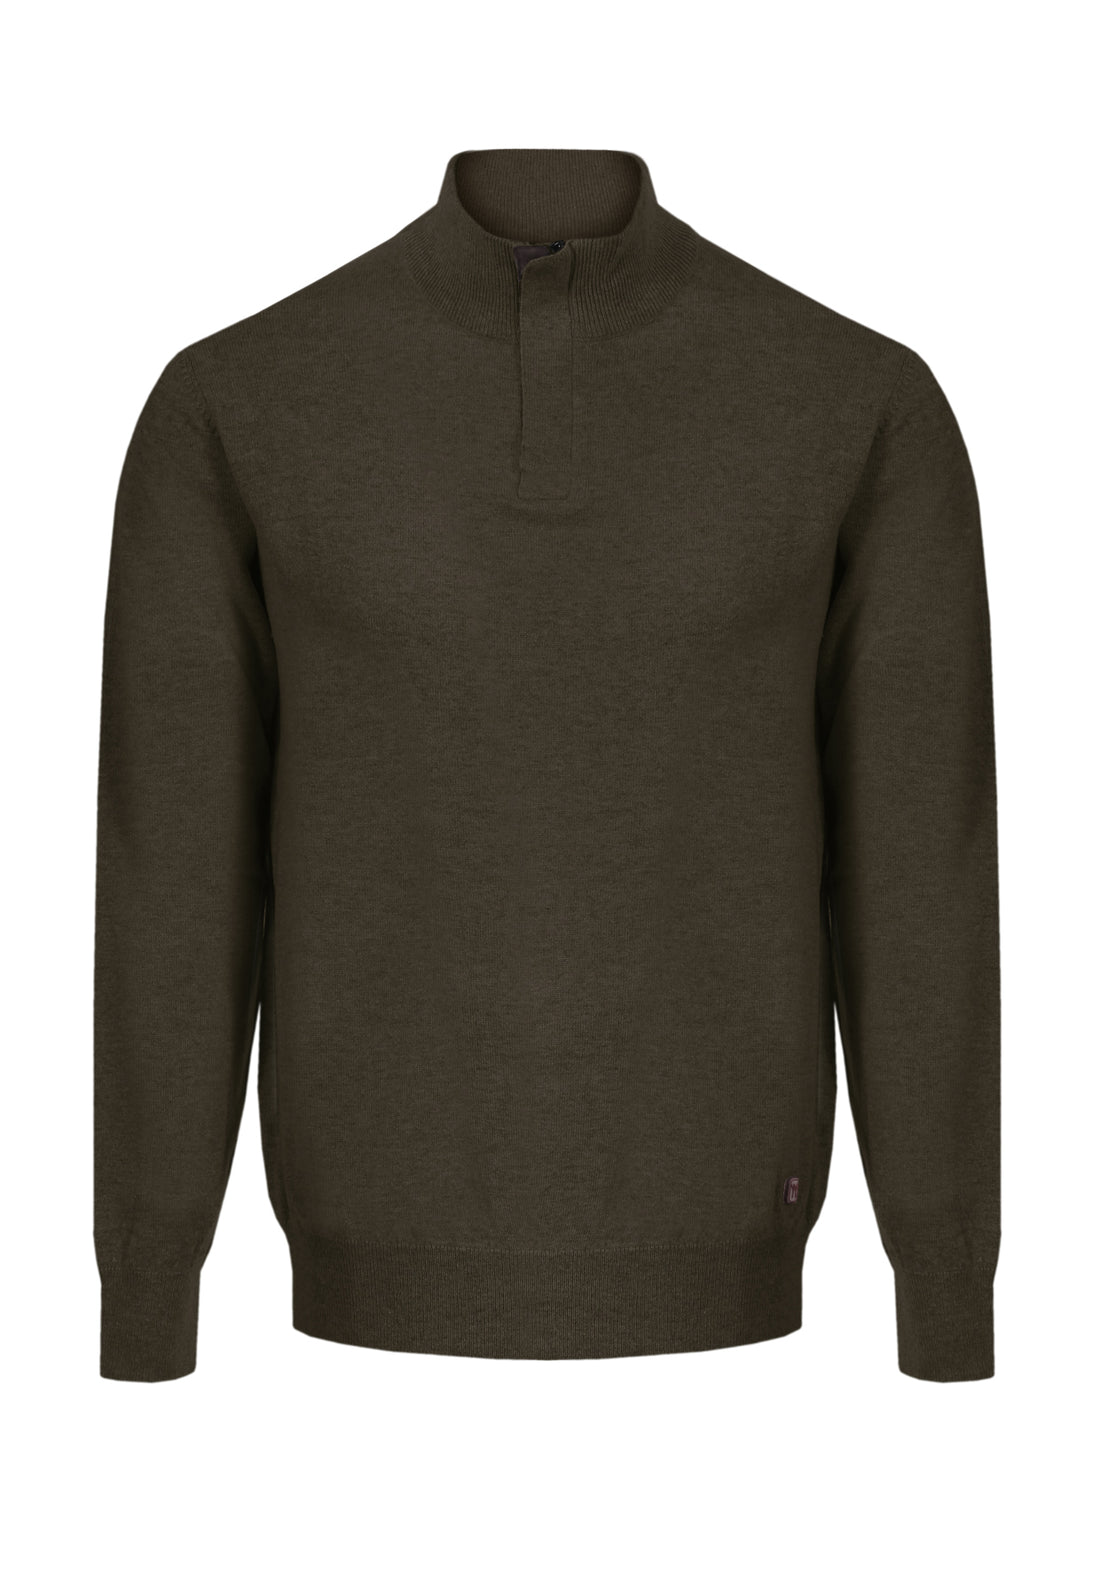 Sweater with contrasting zip closure in suede - dark brown